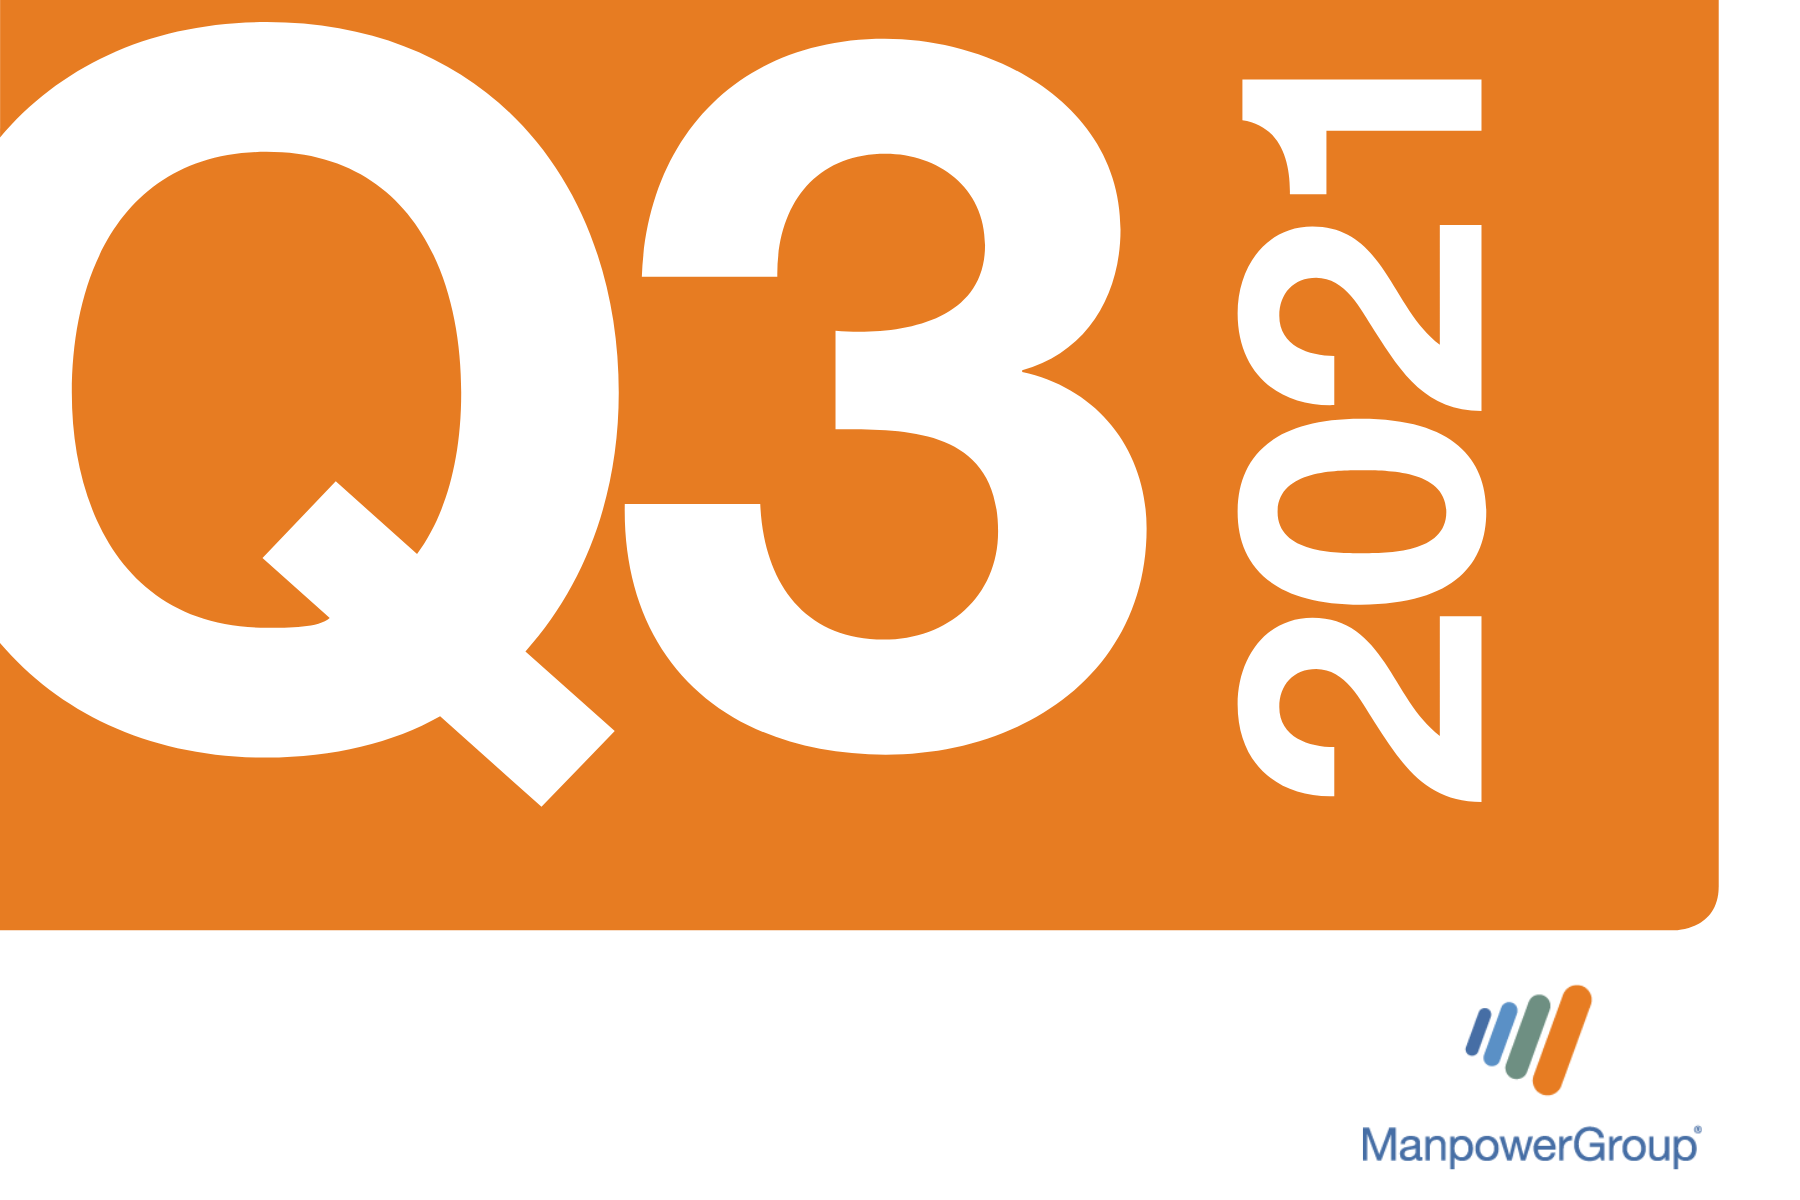 Q321 ManpowerGroup Employment Outlook Survey